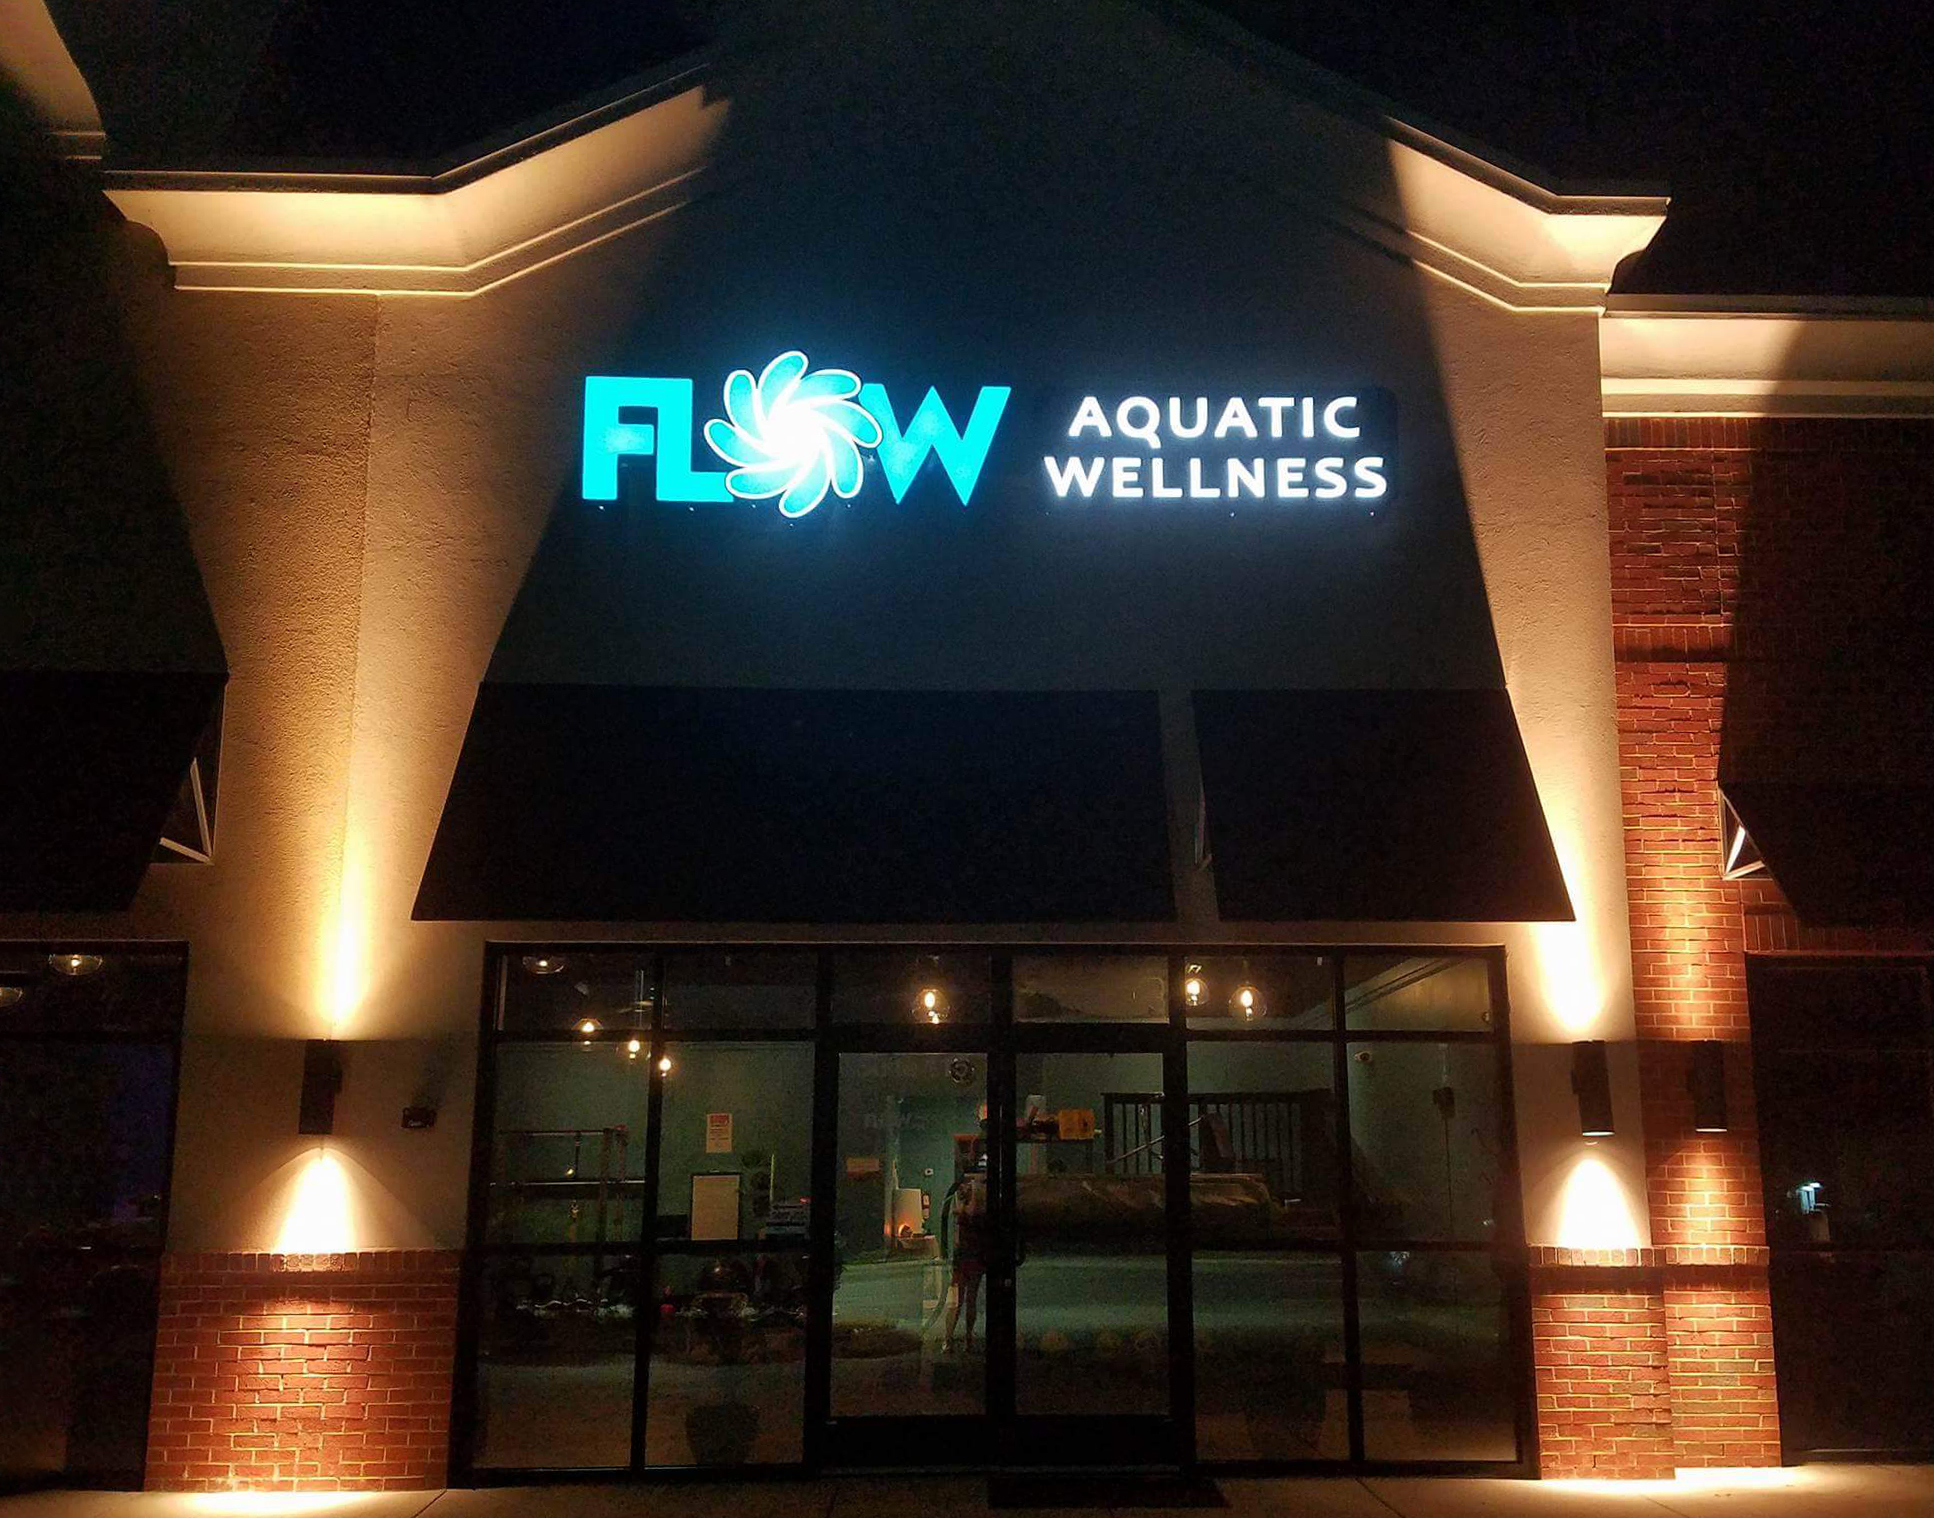 FLOW Aquatic Wellness